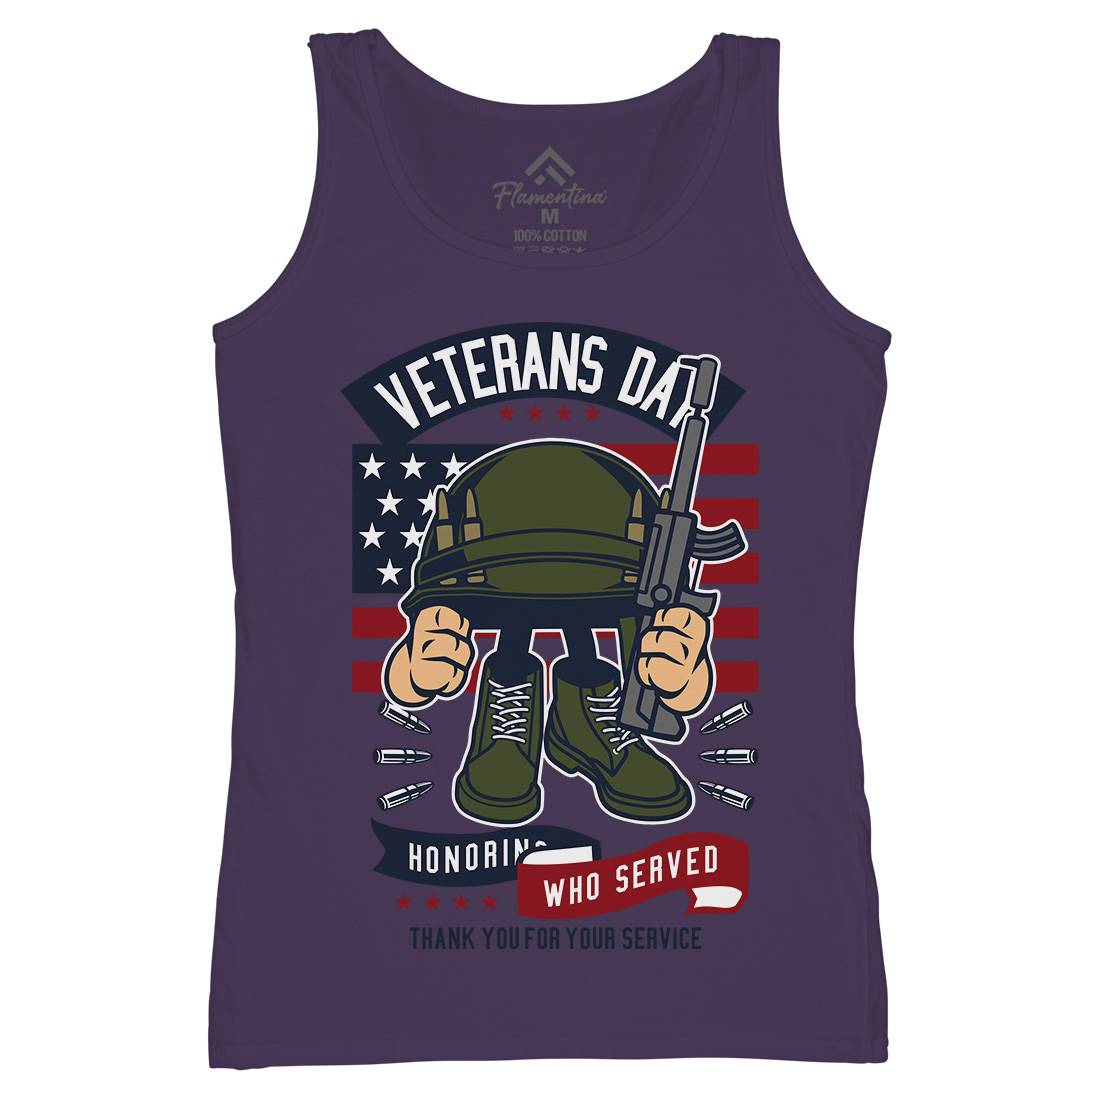 Veterans Day Womens Organic Tank Top Vest Army C686